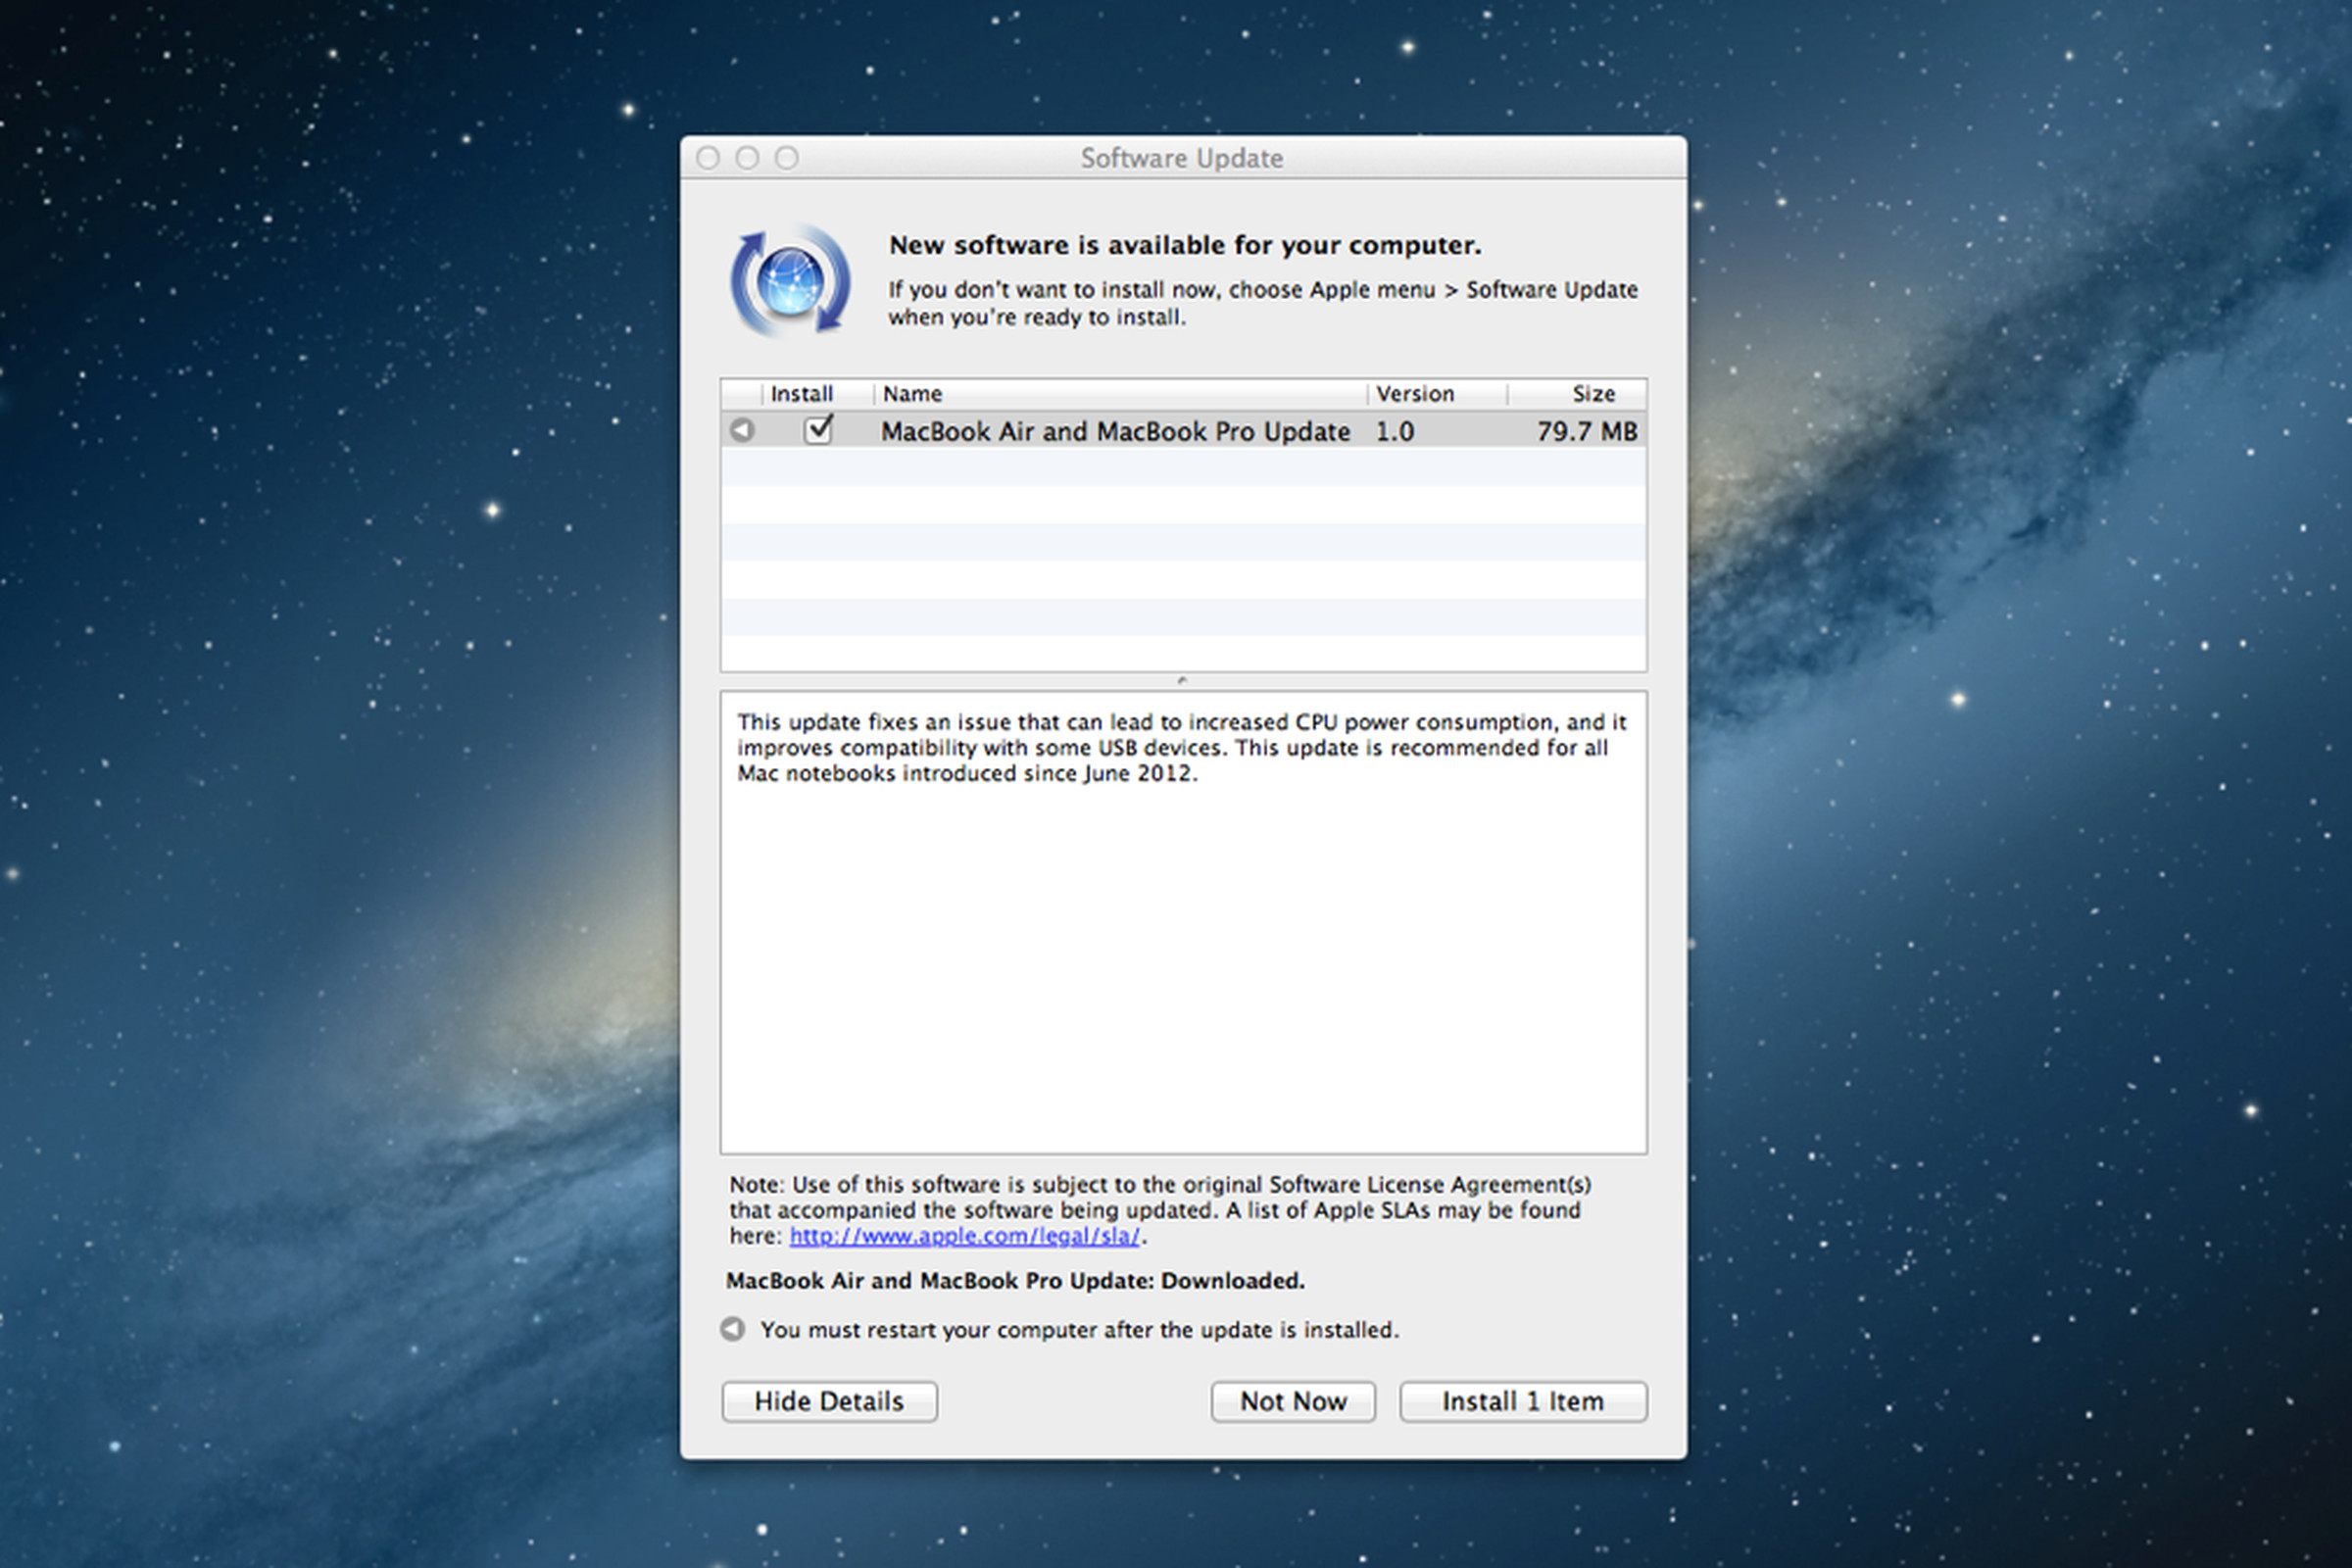 MacBook Air and MacBook Pro software update